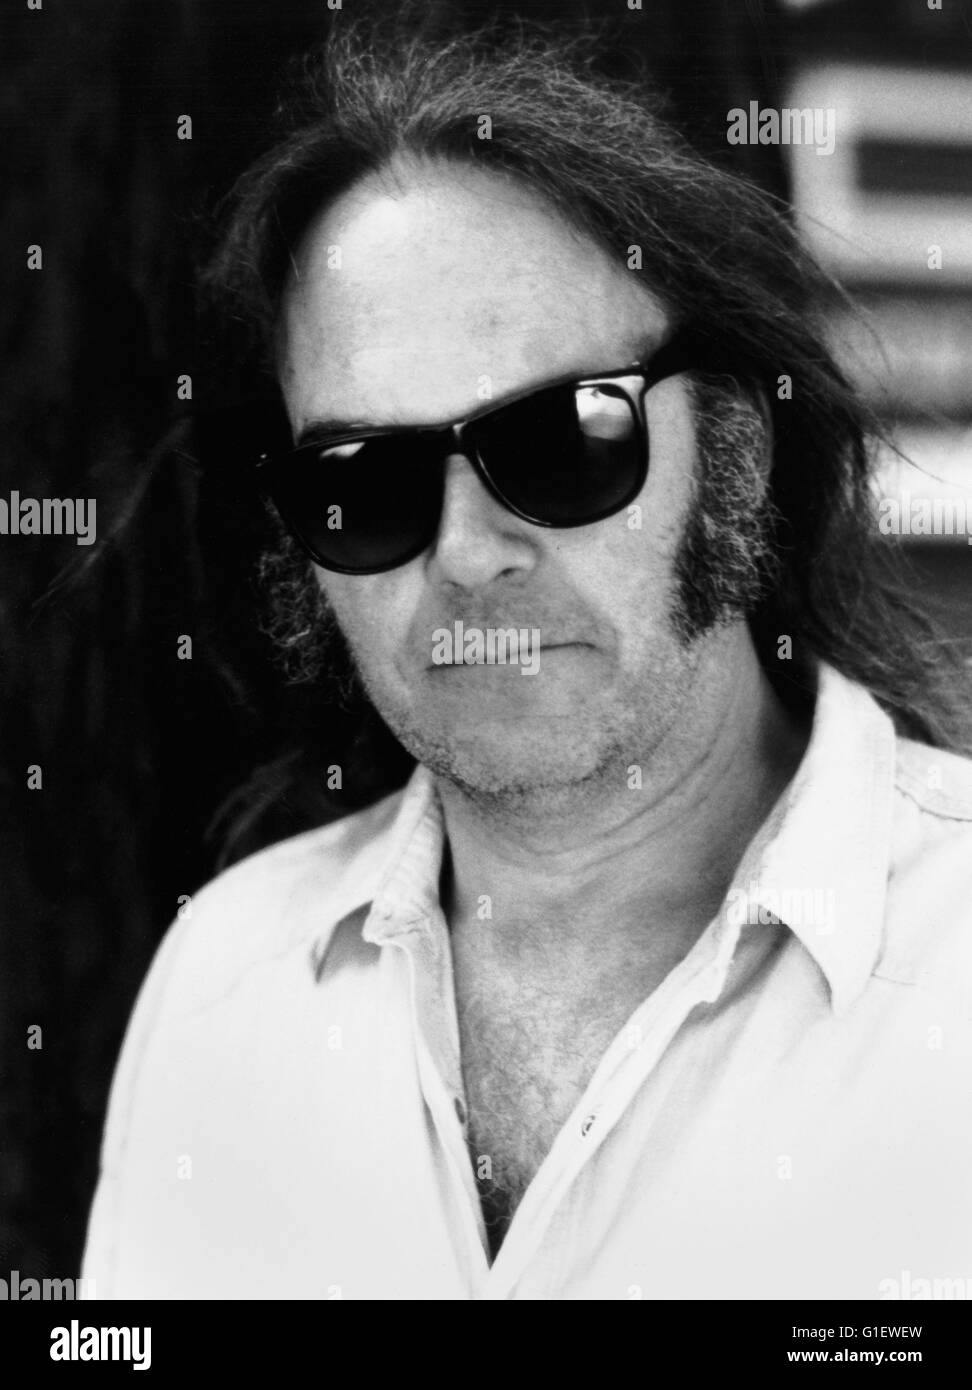 Der kanadische Rockmusiker Neil Young, 1990er Jahre. Canadian rock singer Neil Young, 1990s. Stock Photo